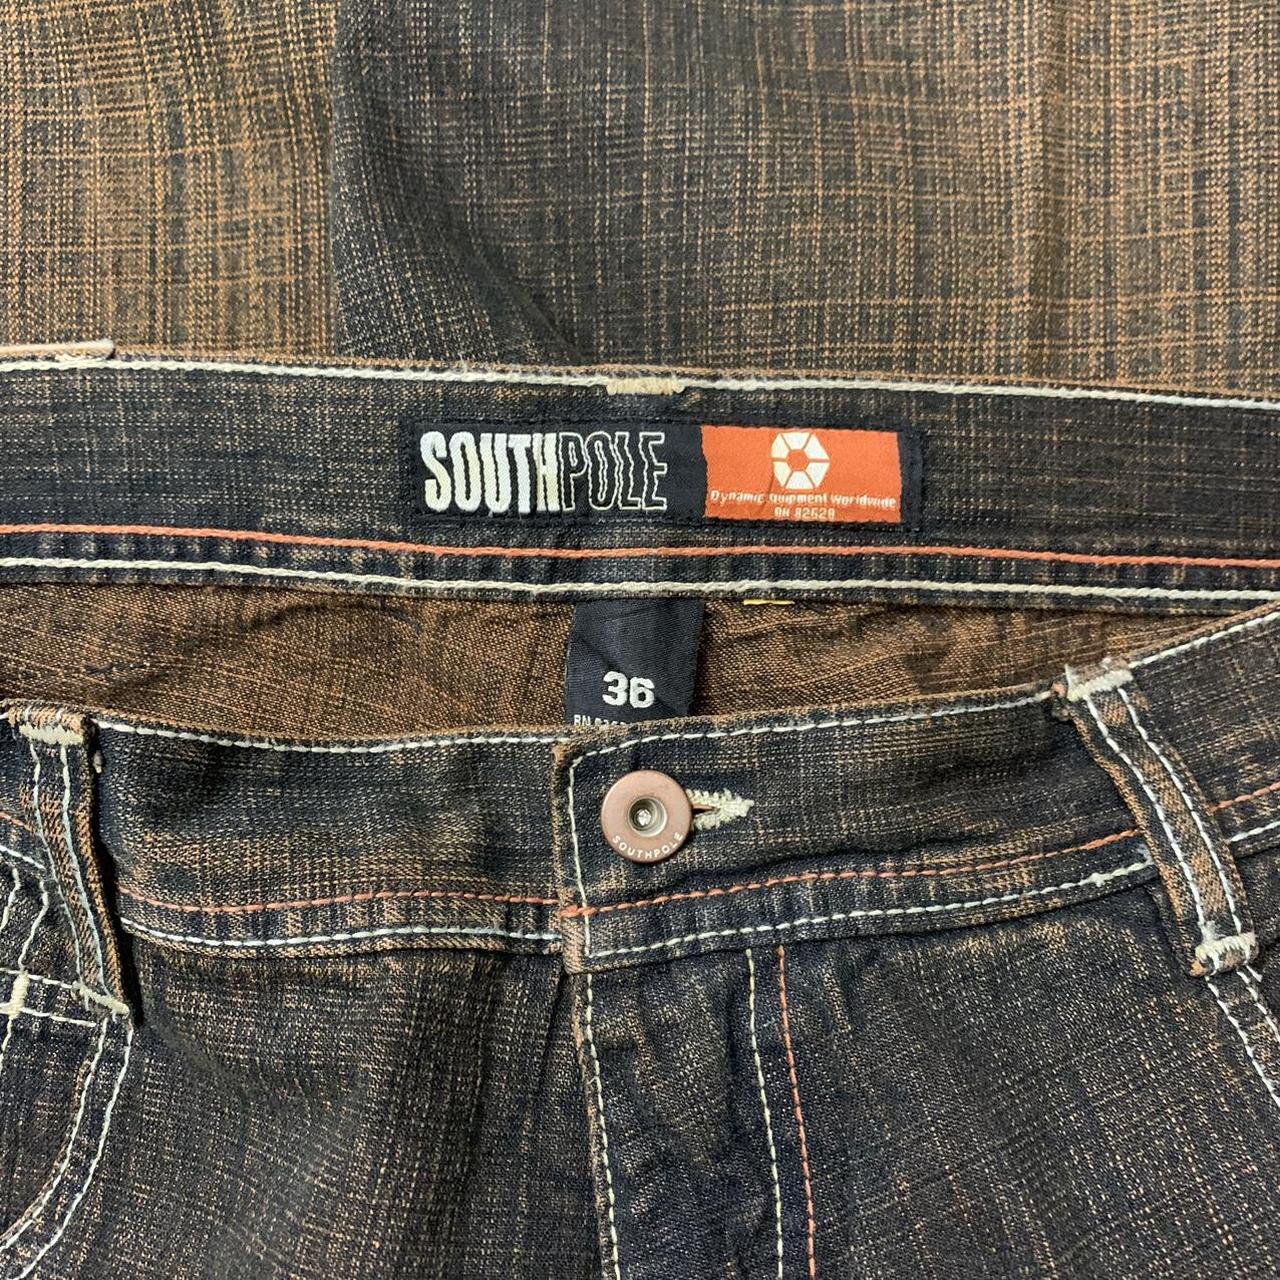 Southpole Men's Brown and Orange Jeans | Depop